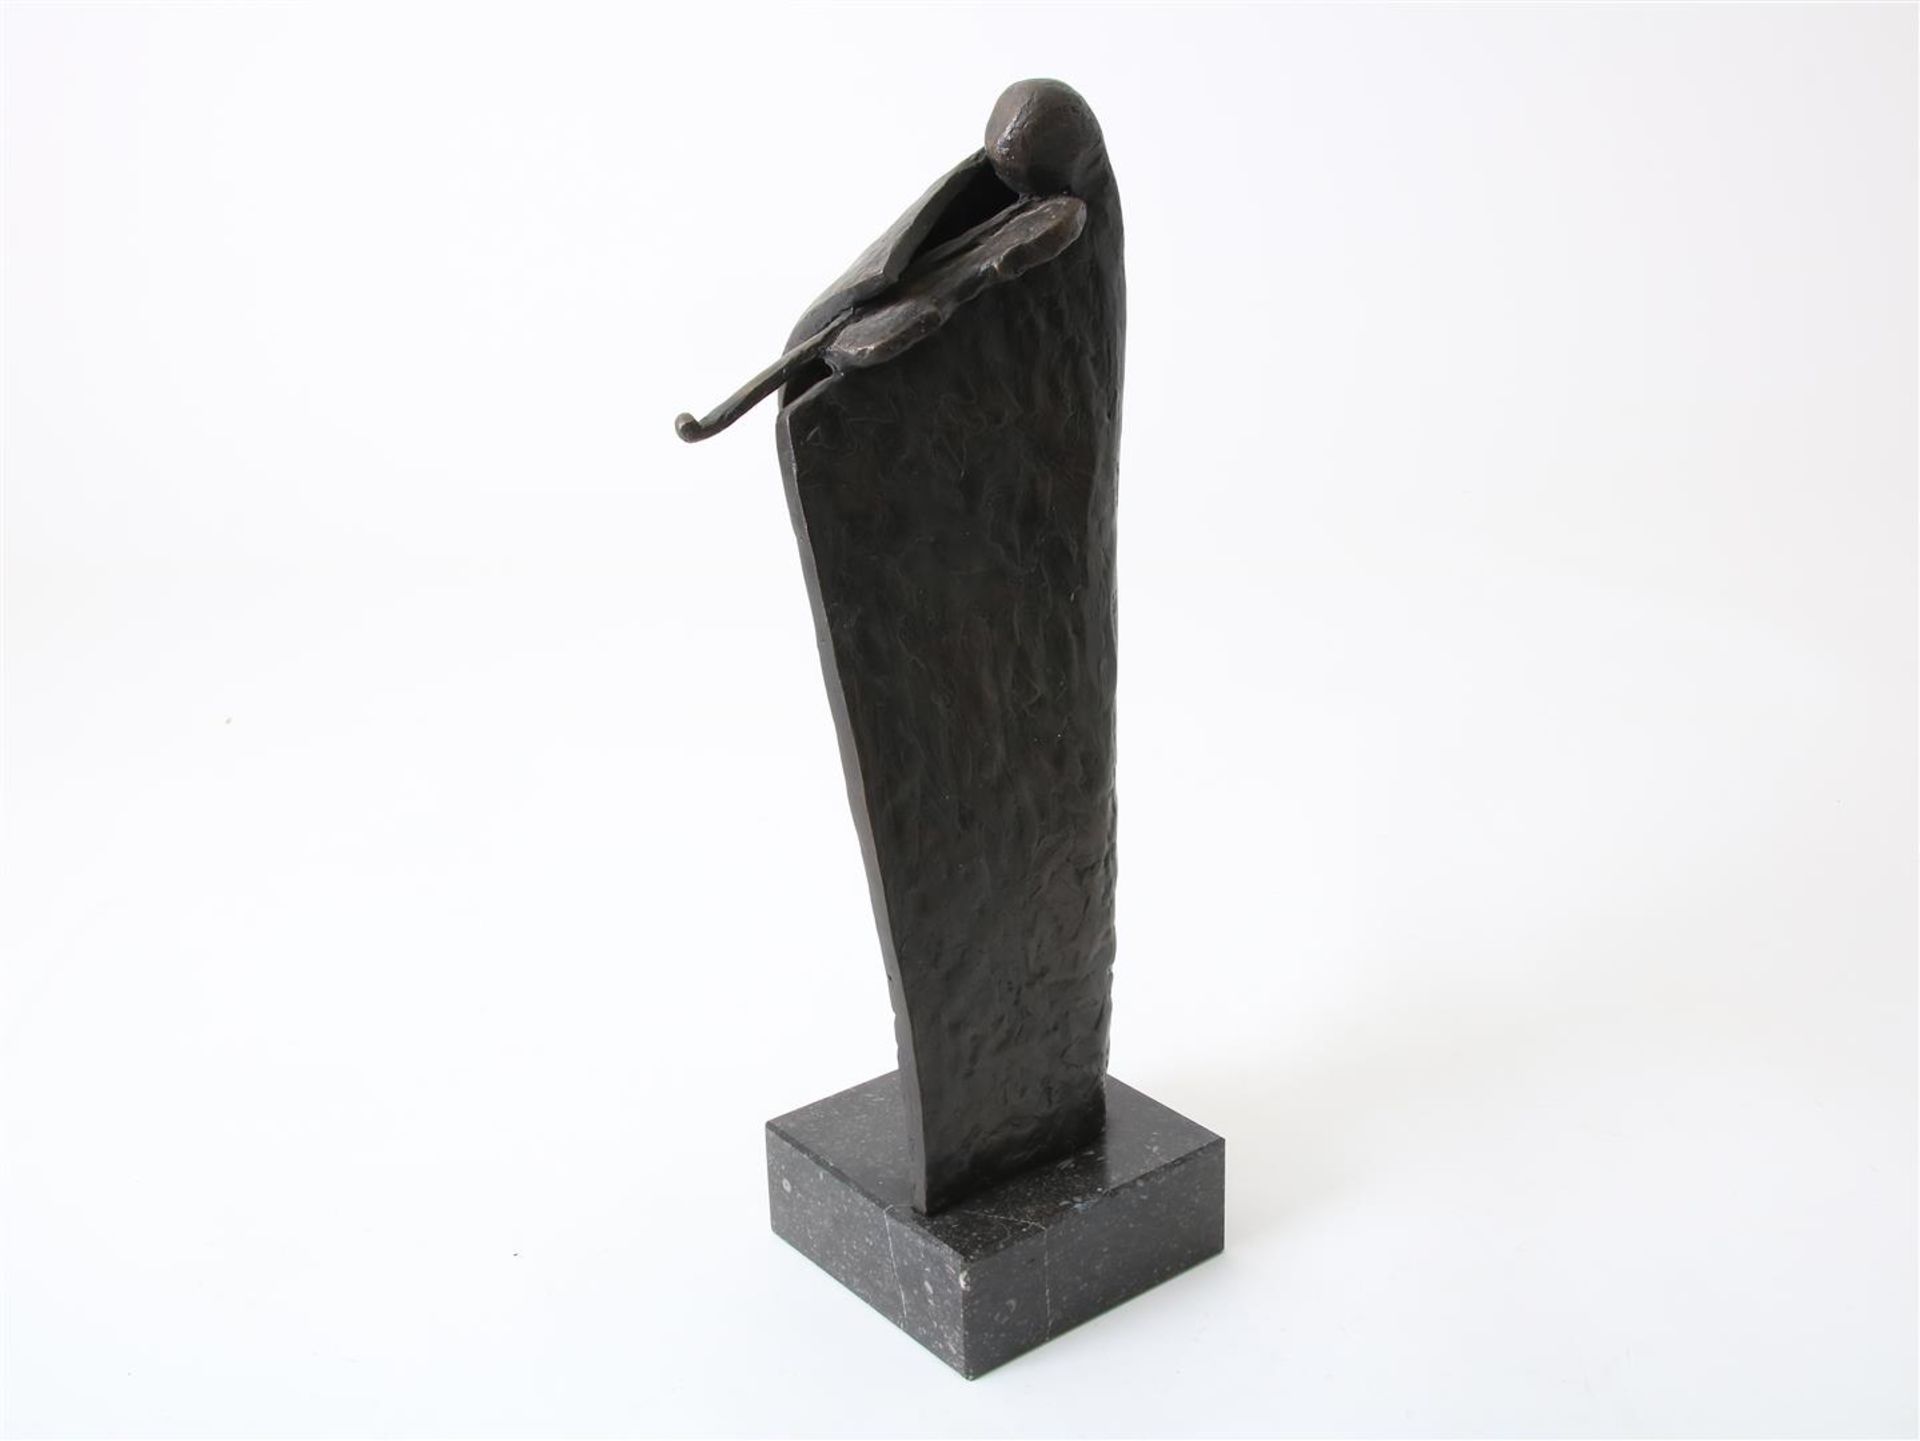 Renée Leusden (1947-) 'Violinist', bronze sculpture on marble base, 45 x 9 x 11 cm.